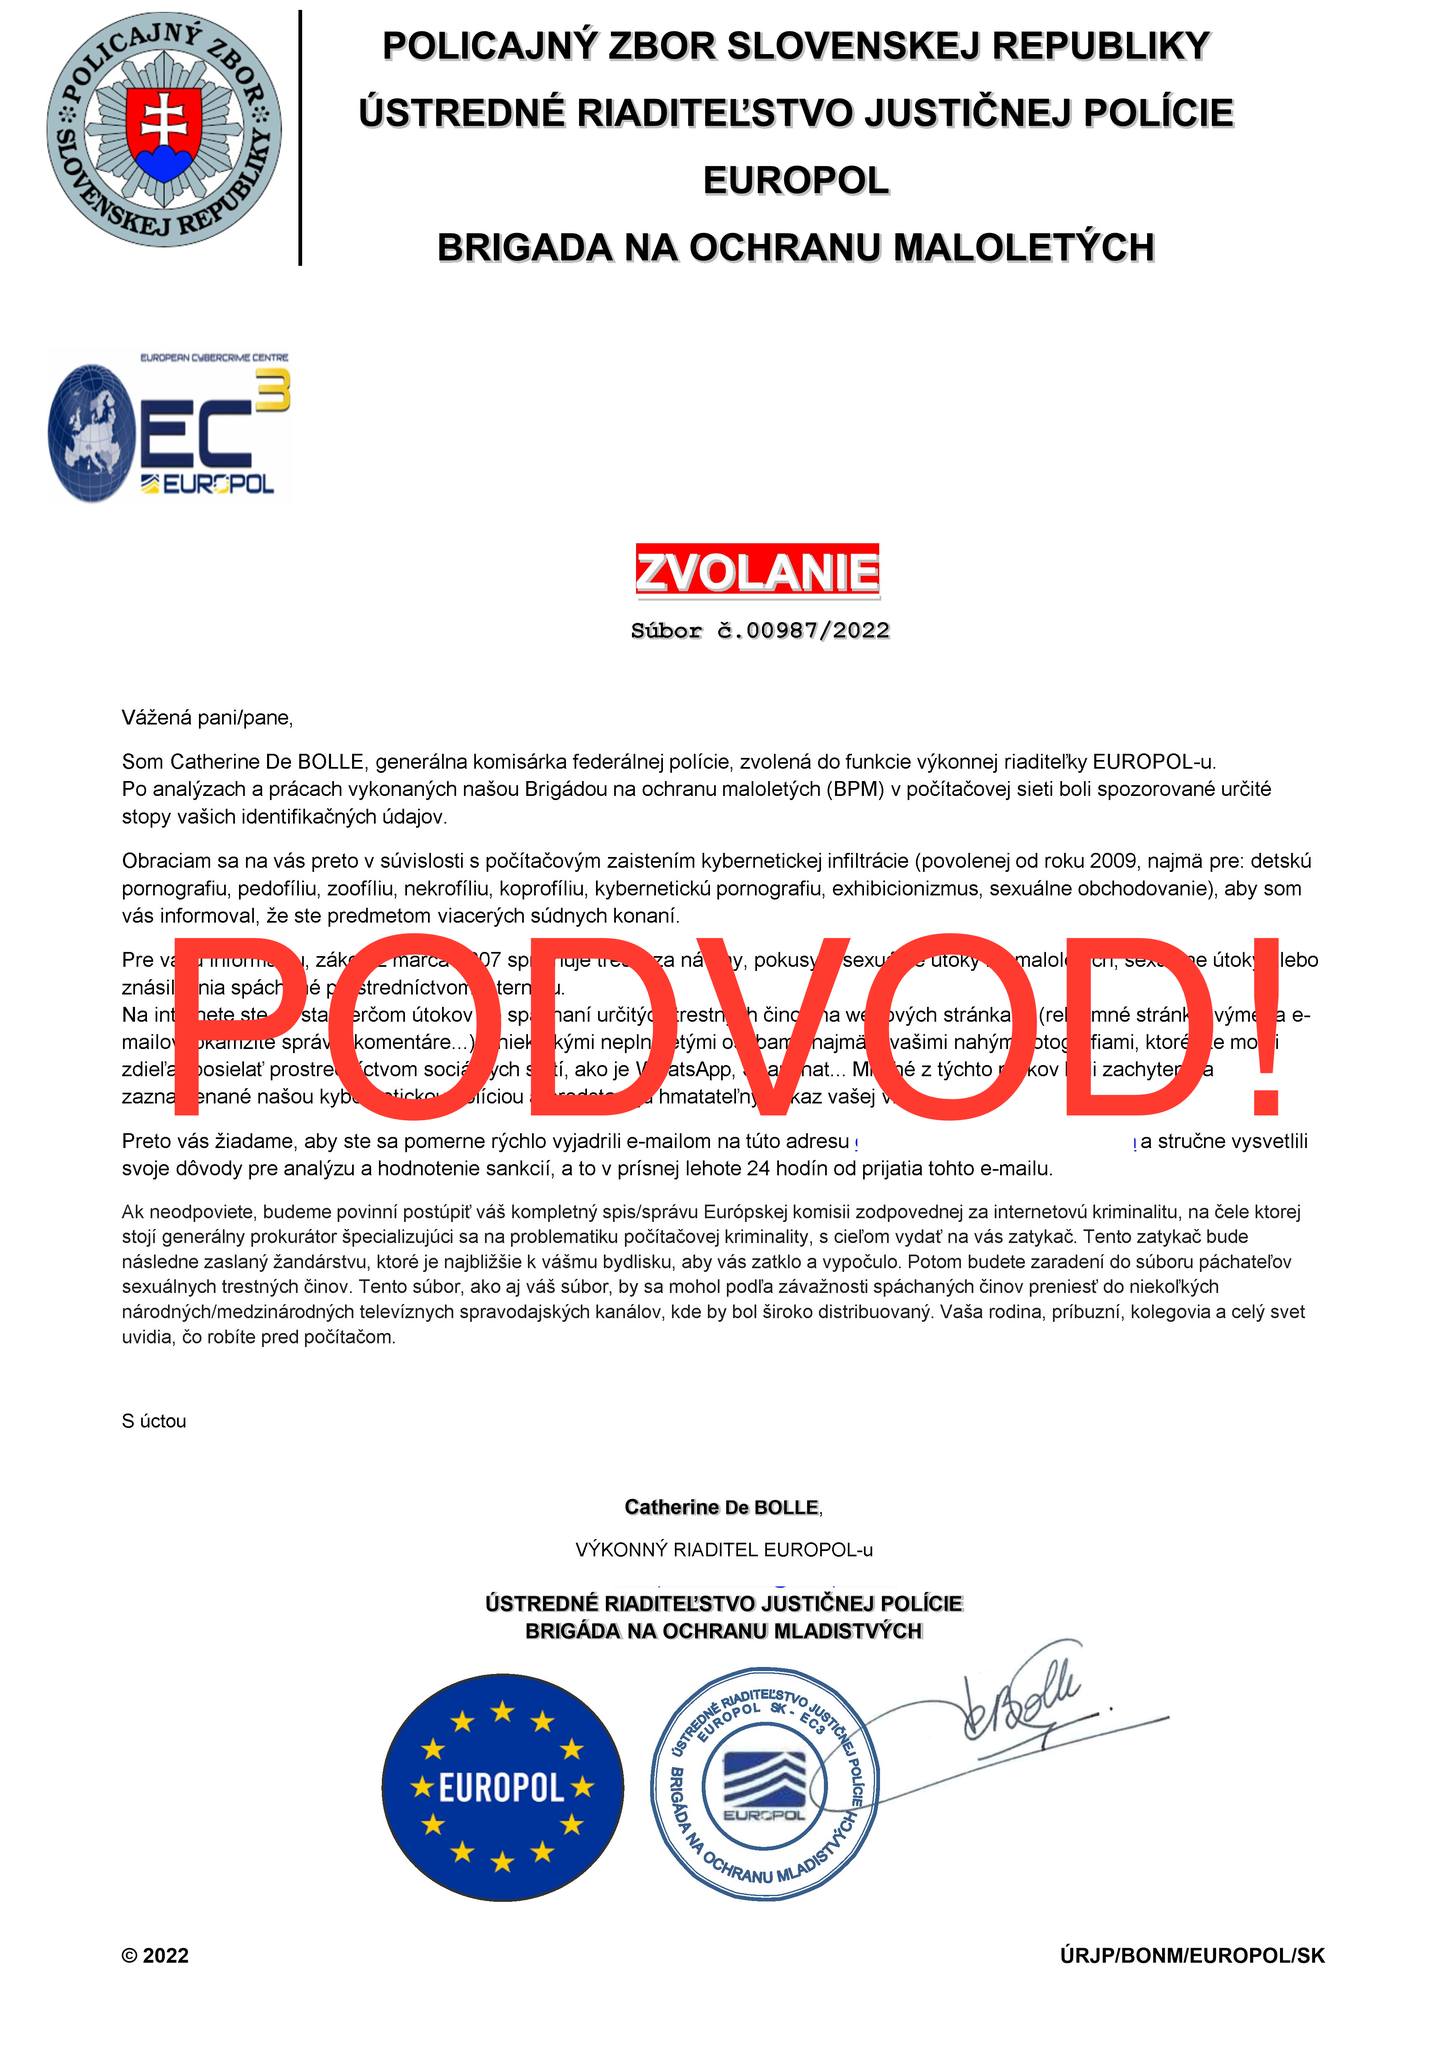 Podvodný e-mail od EUROPOL-u. 